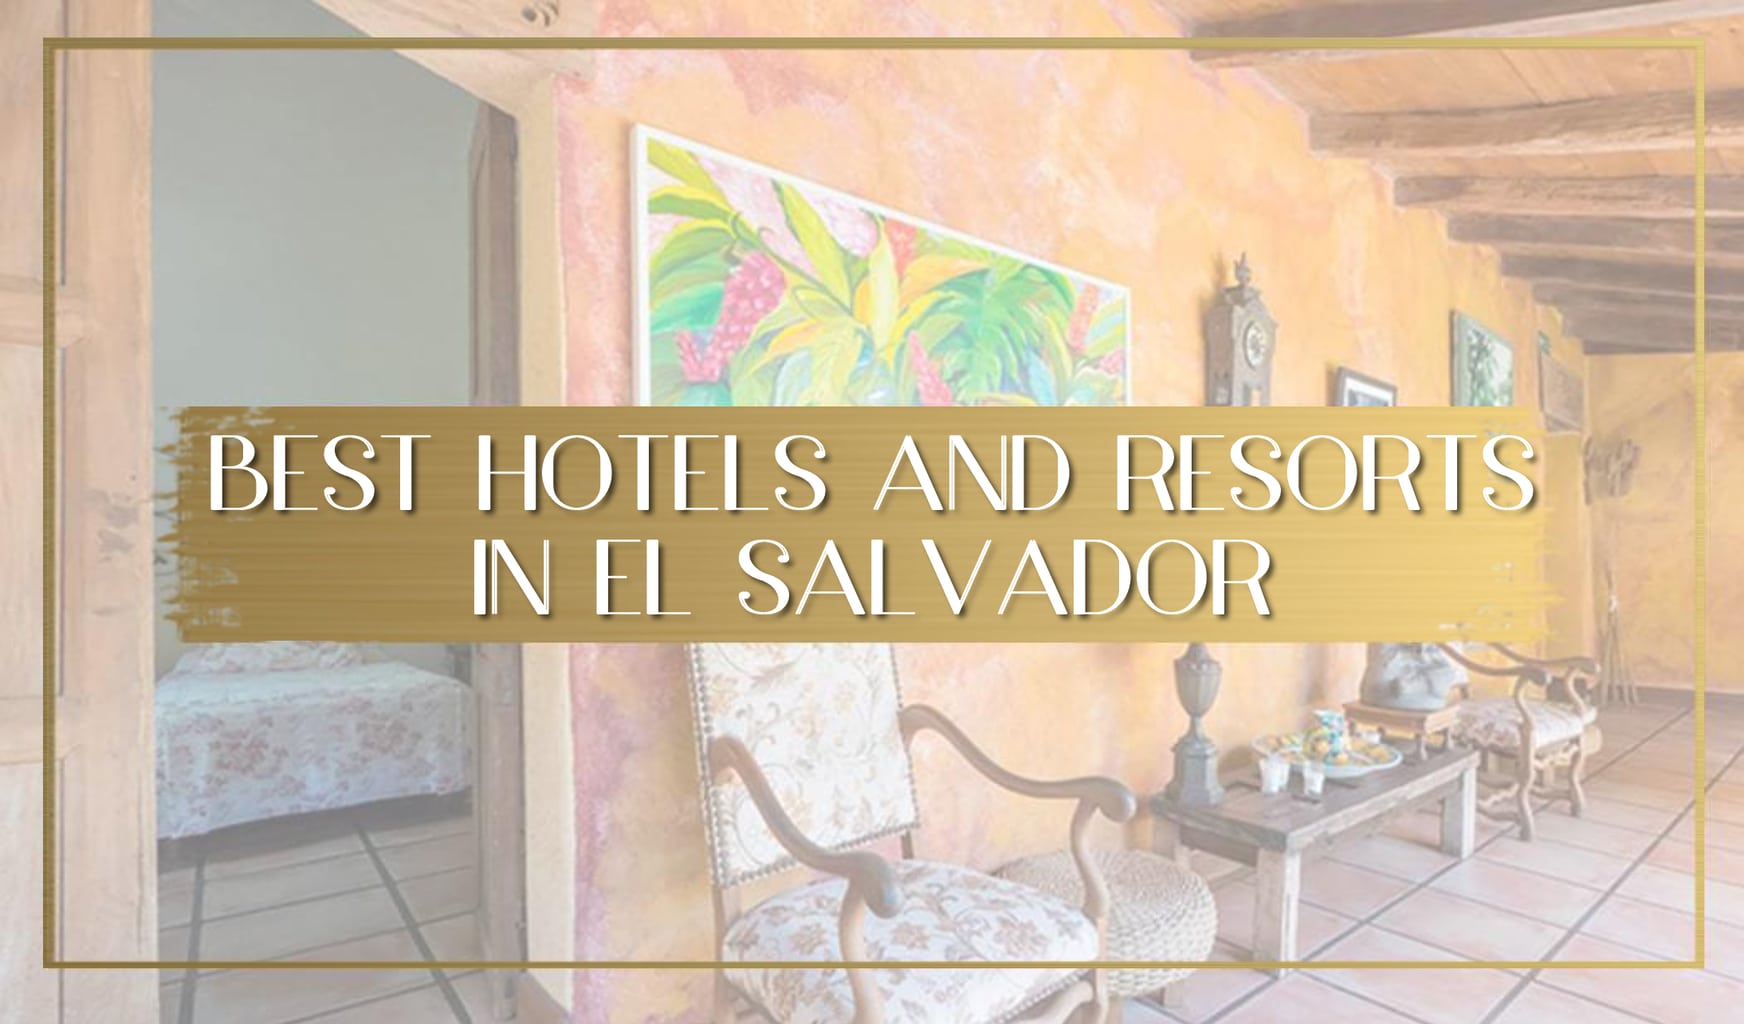 Best hotels and resorts in El Salvador main